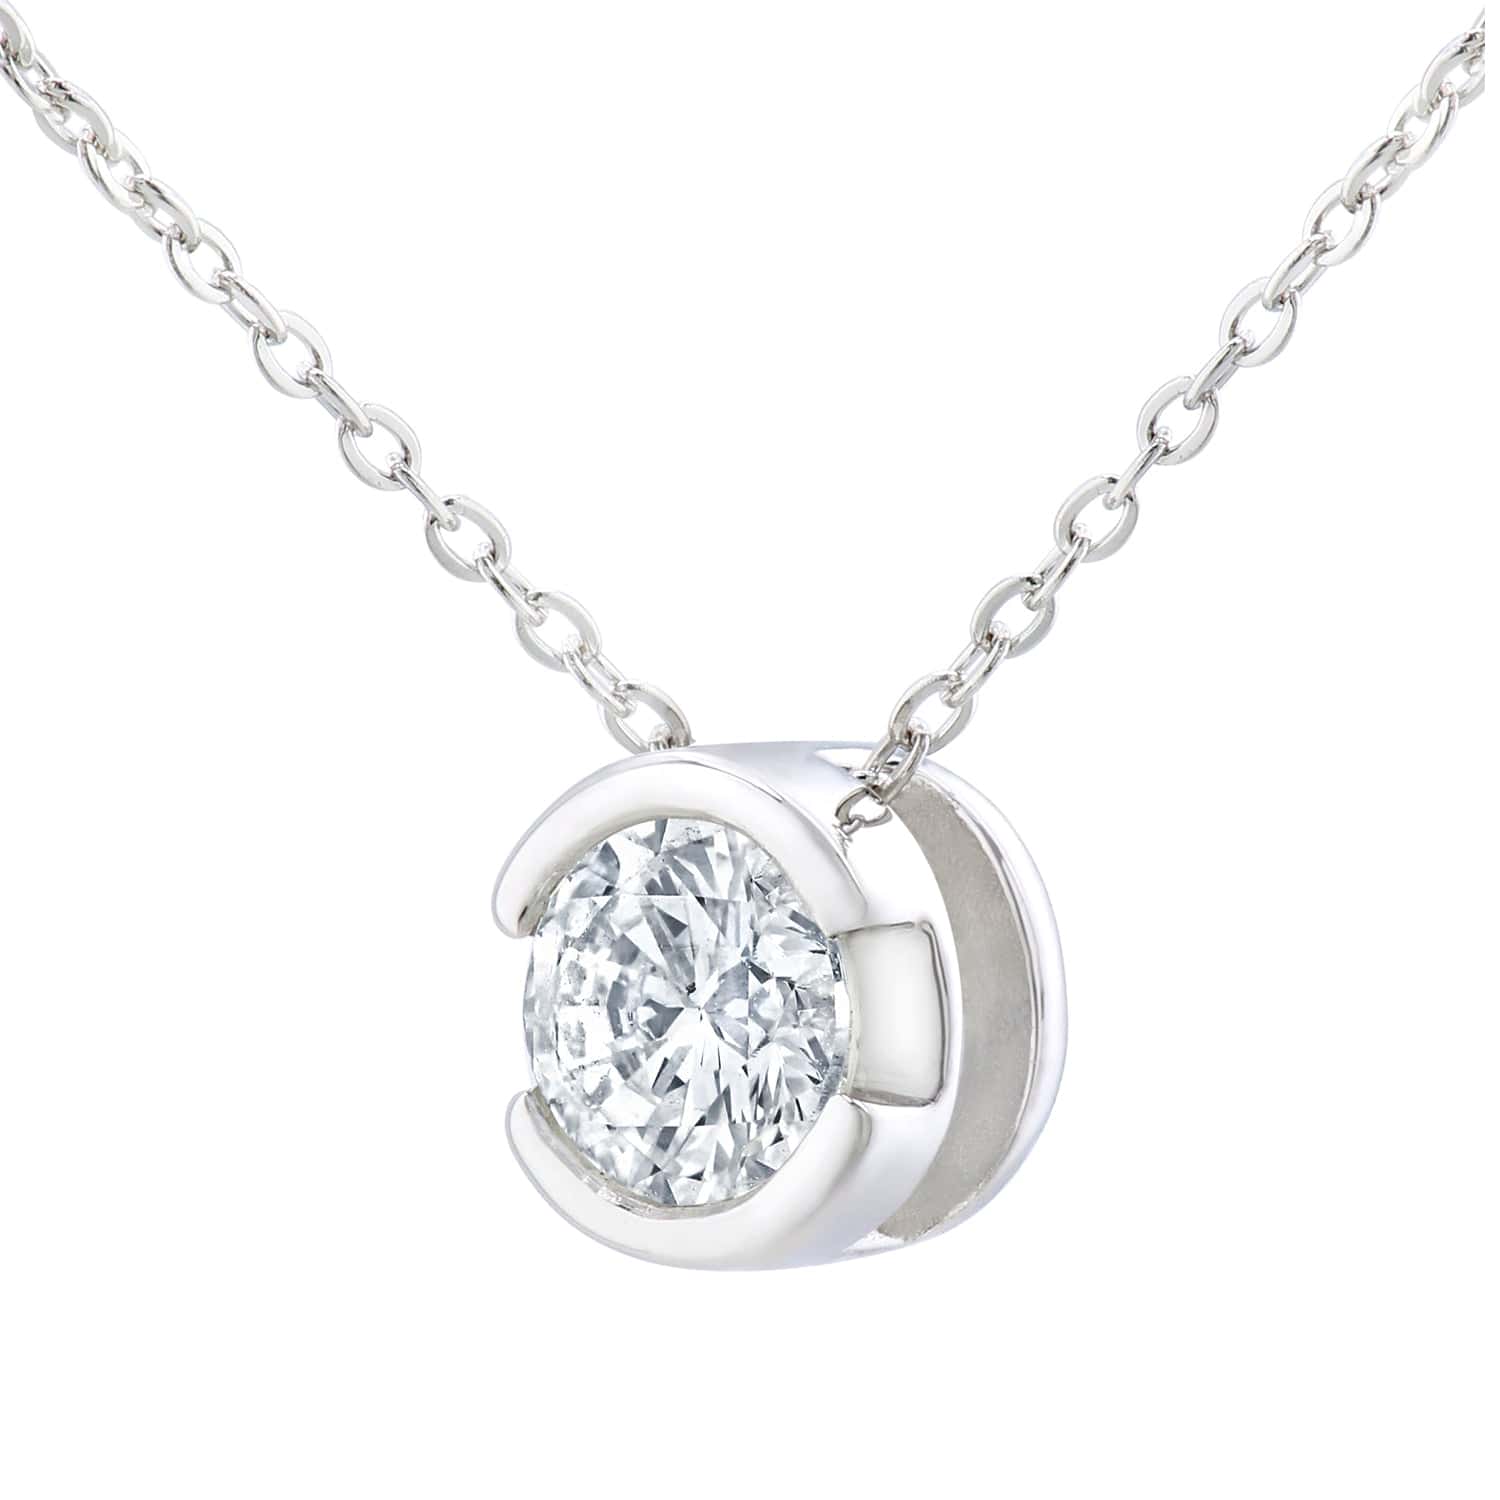 Lynora Luxe Pendant White Gold 9ct / Diamond 9ct White Gold 0.25 ct Diamond Pendant and Chain